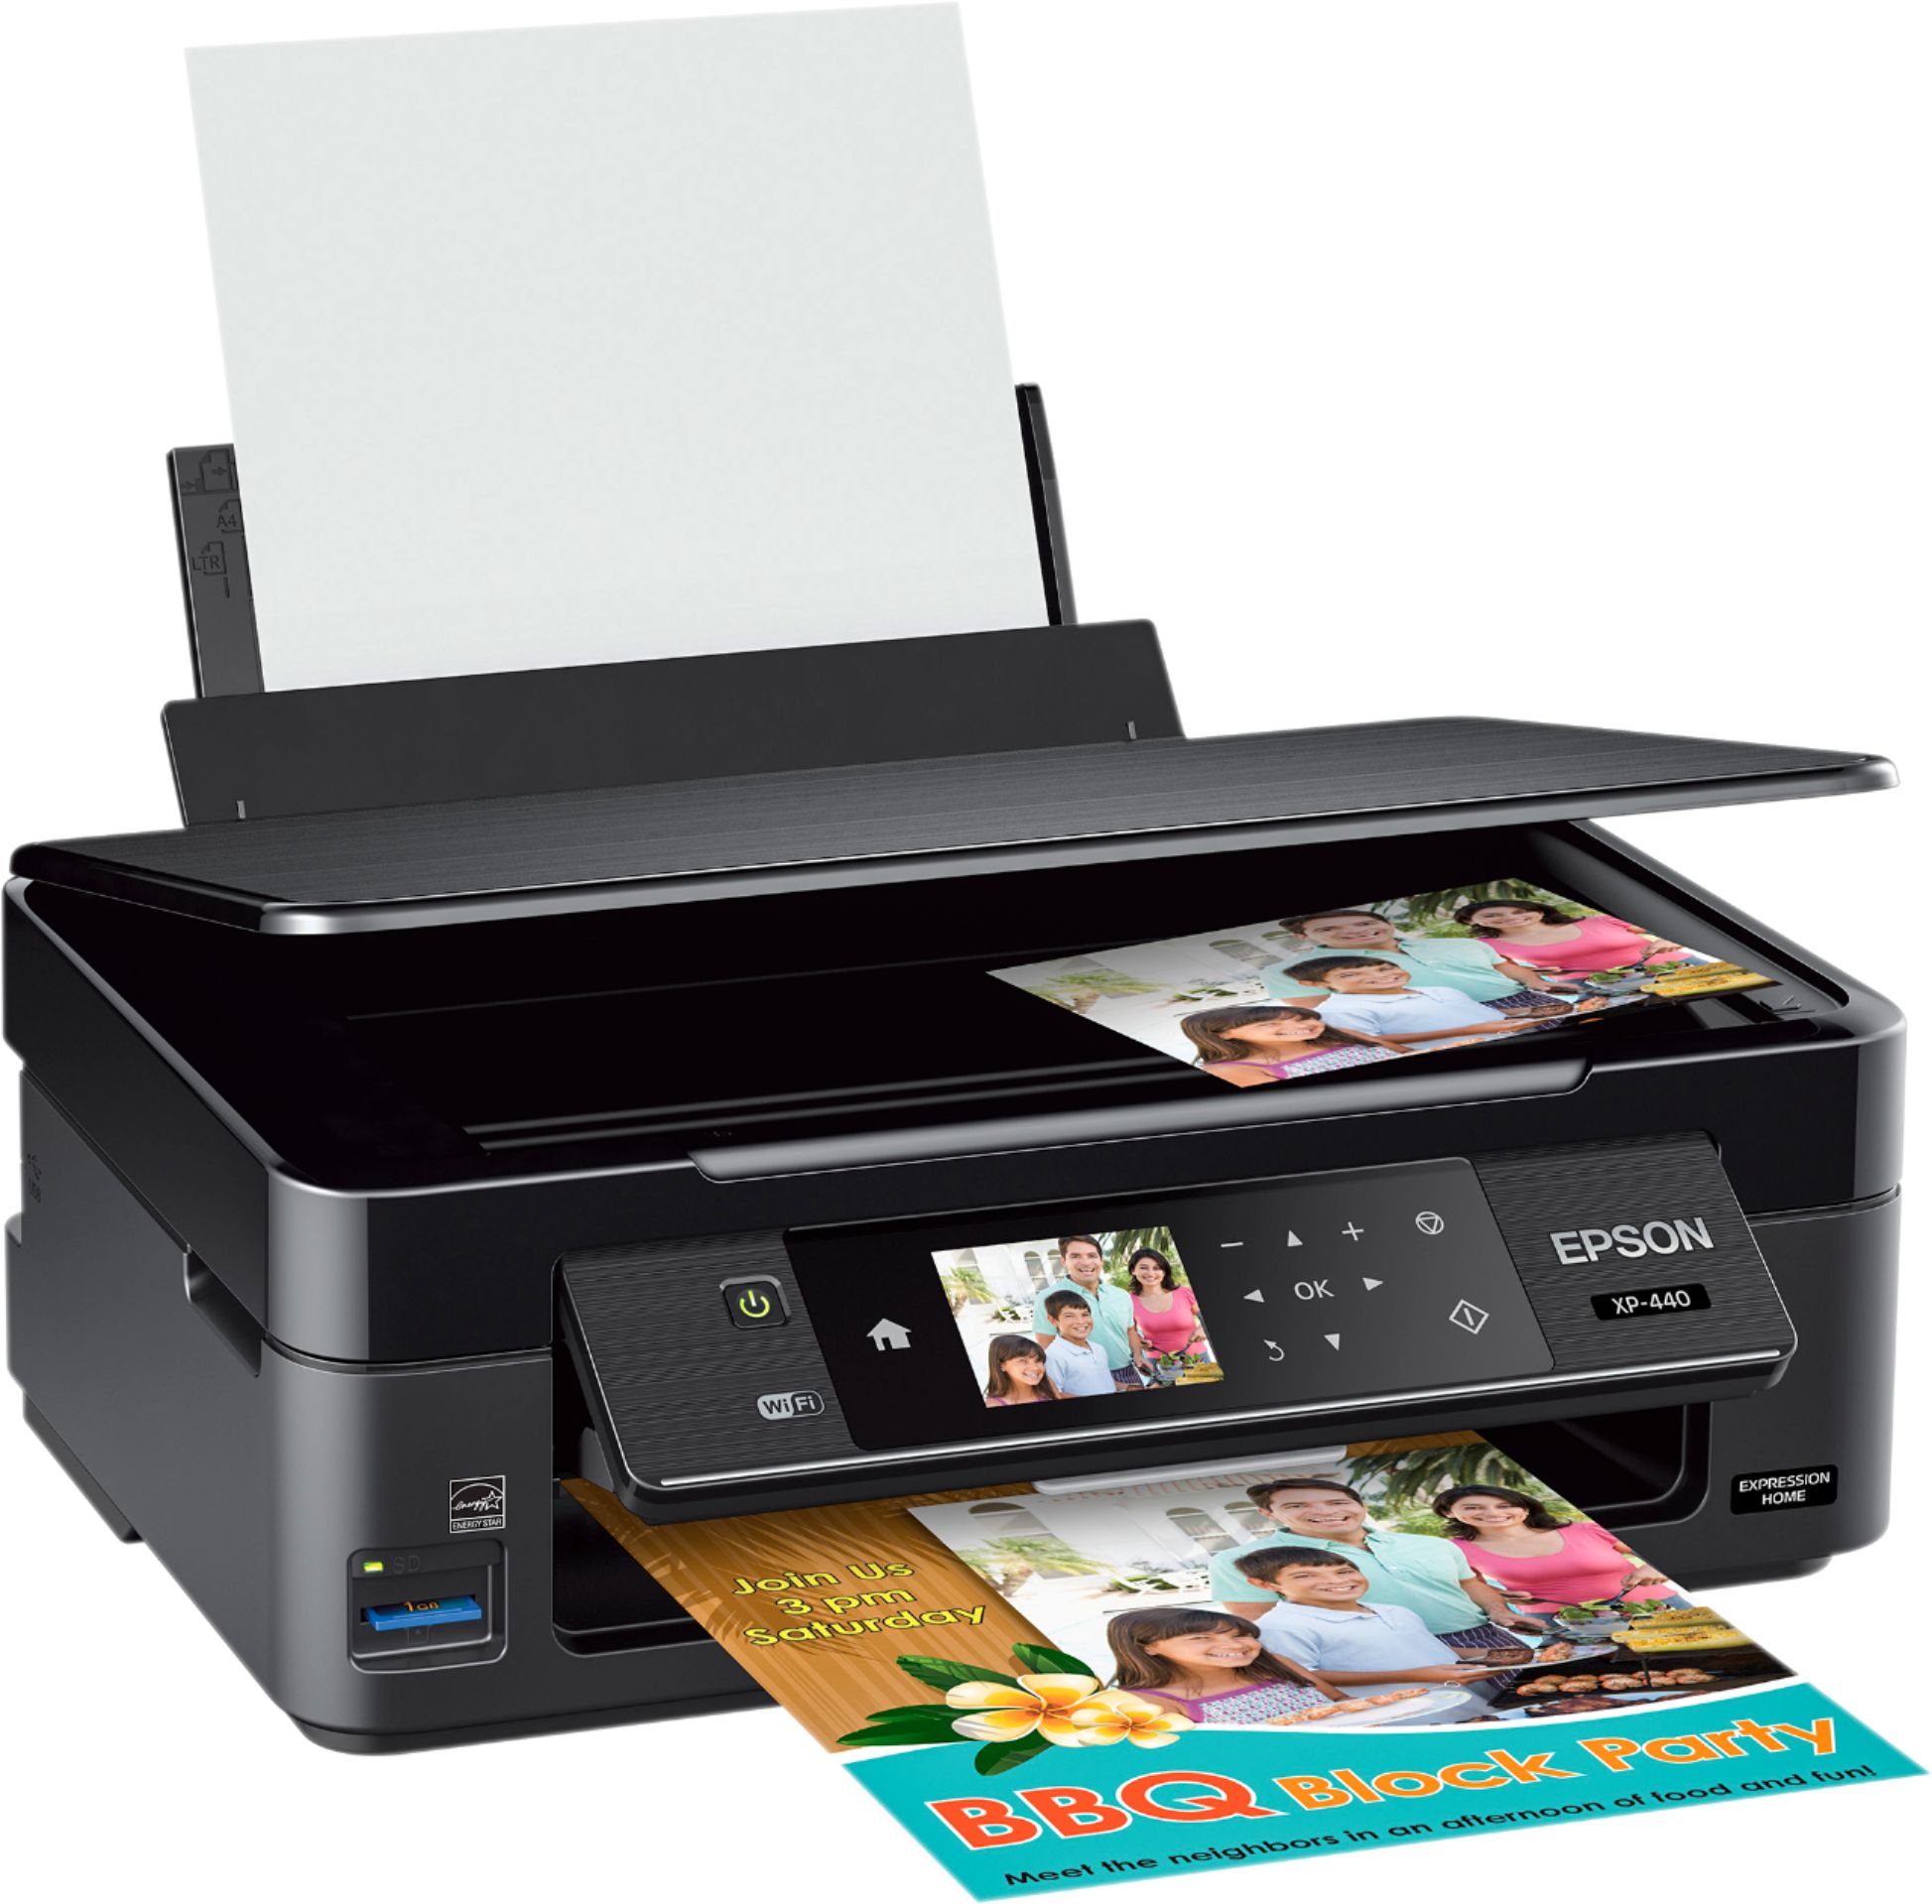 Inkjet, Printers, For Home